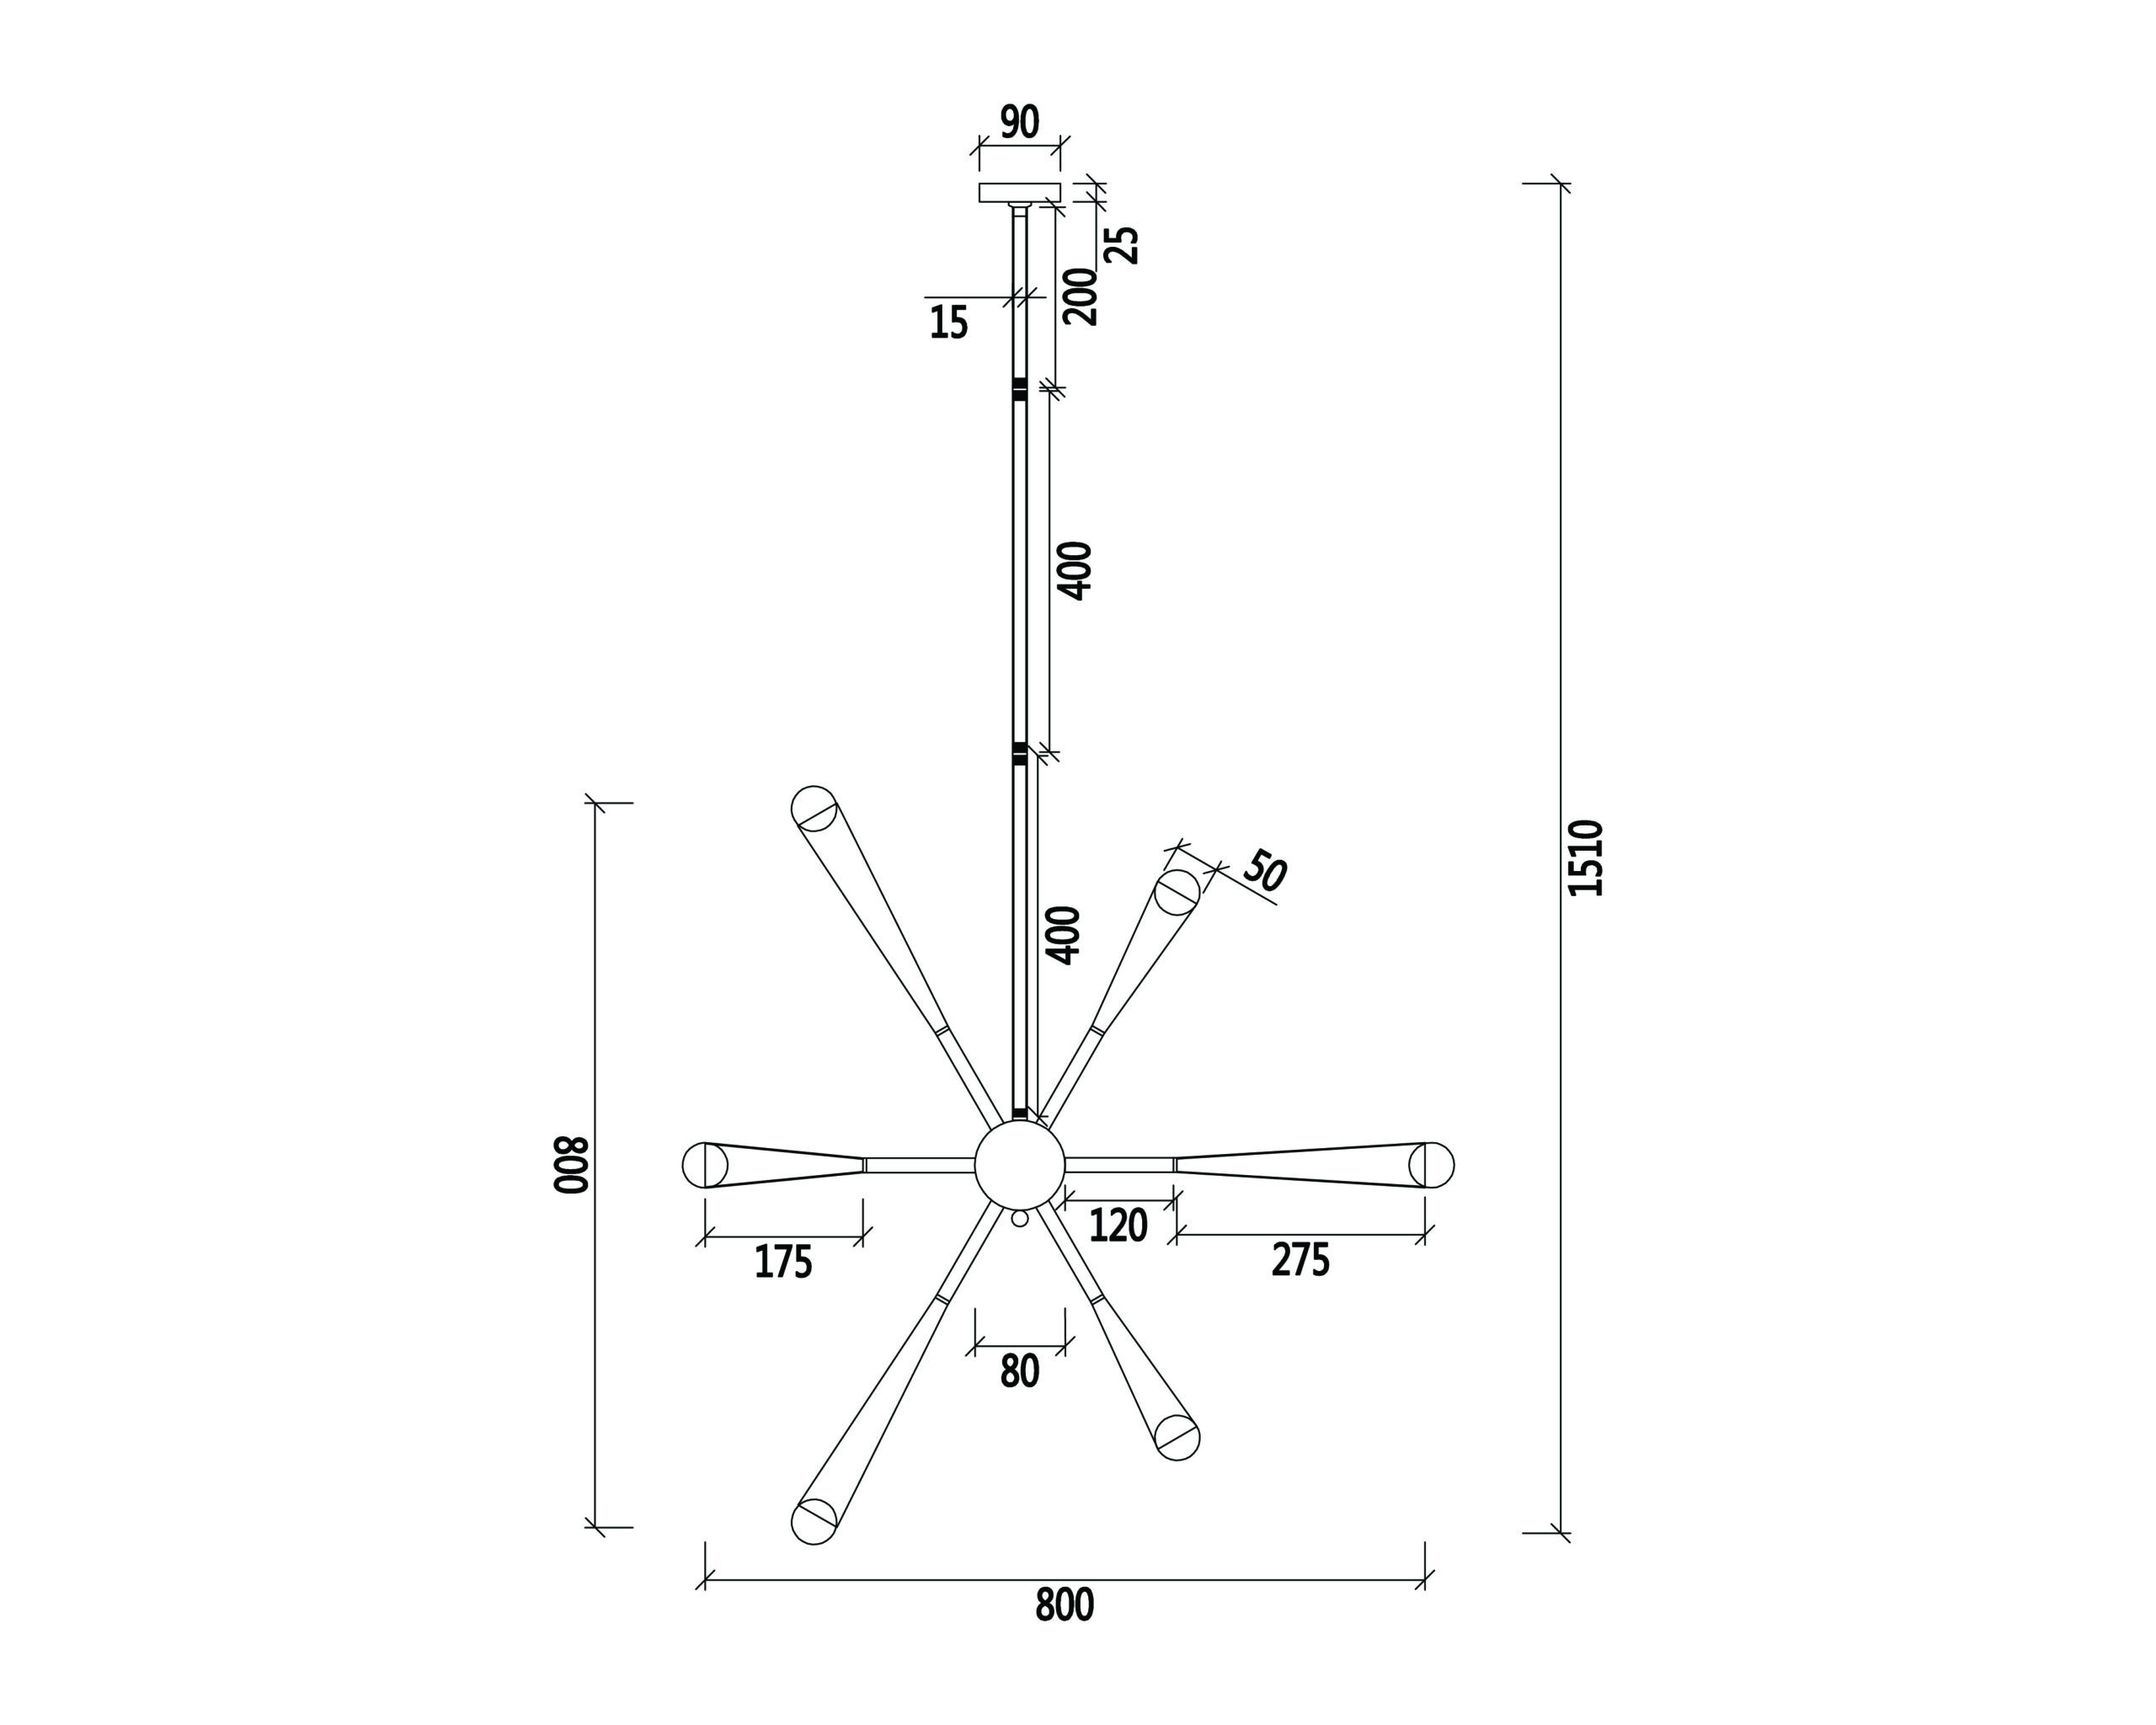 LE022-PD-0315 – L&E – Pheonix Pendant – CAD – 4000 x 3200